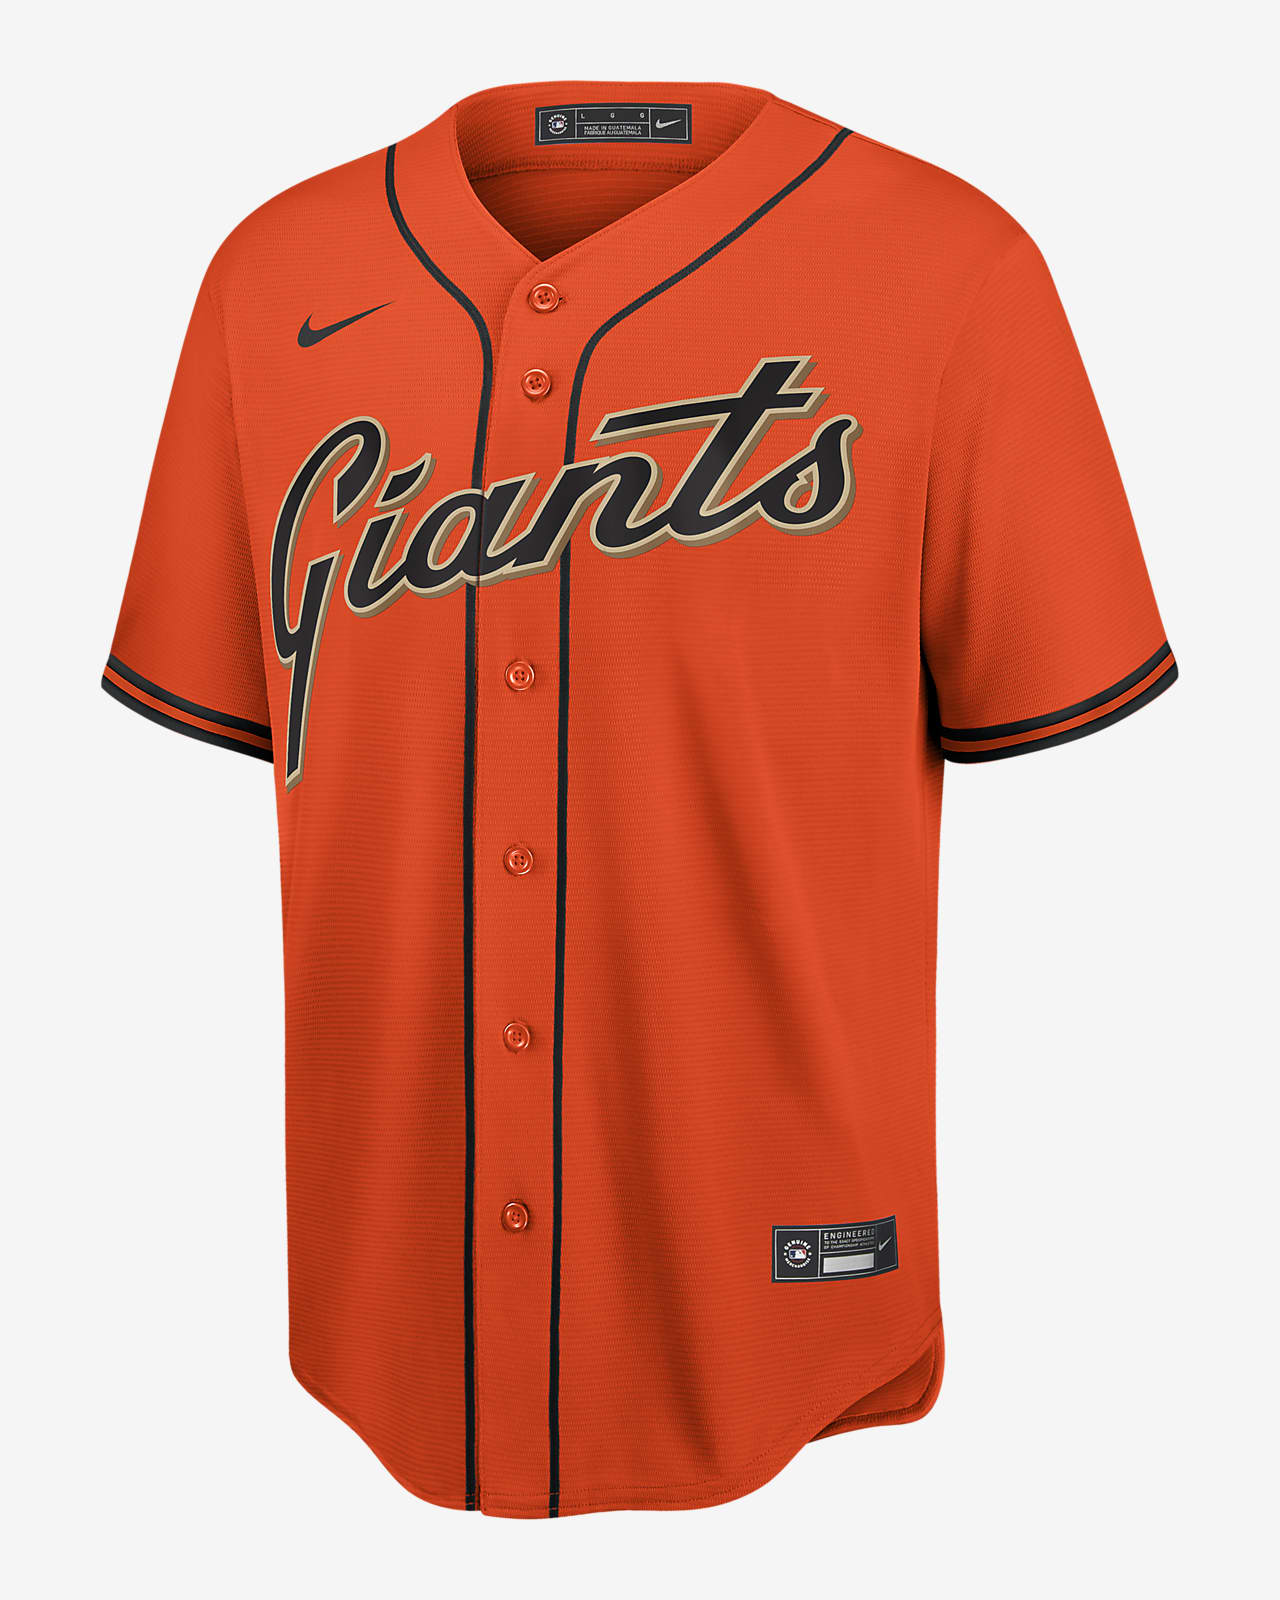 Camiseta de béisbol réplica para hombre MLB Francisco Nike.com